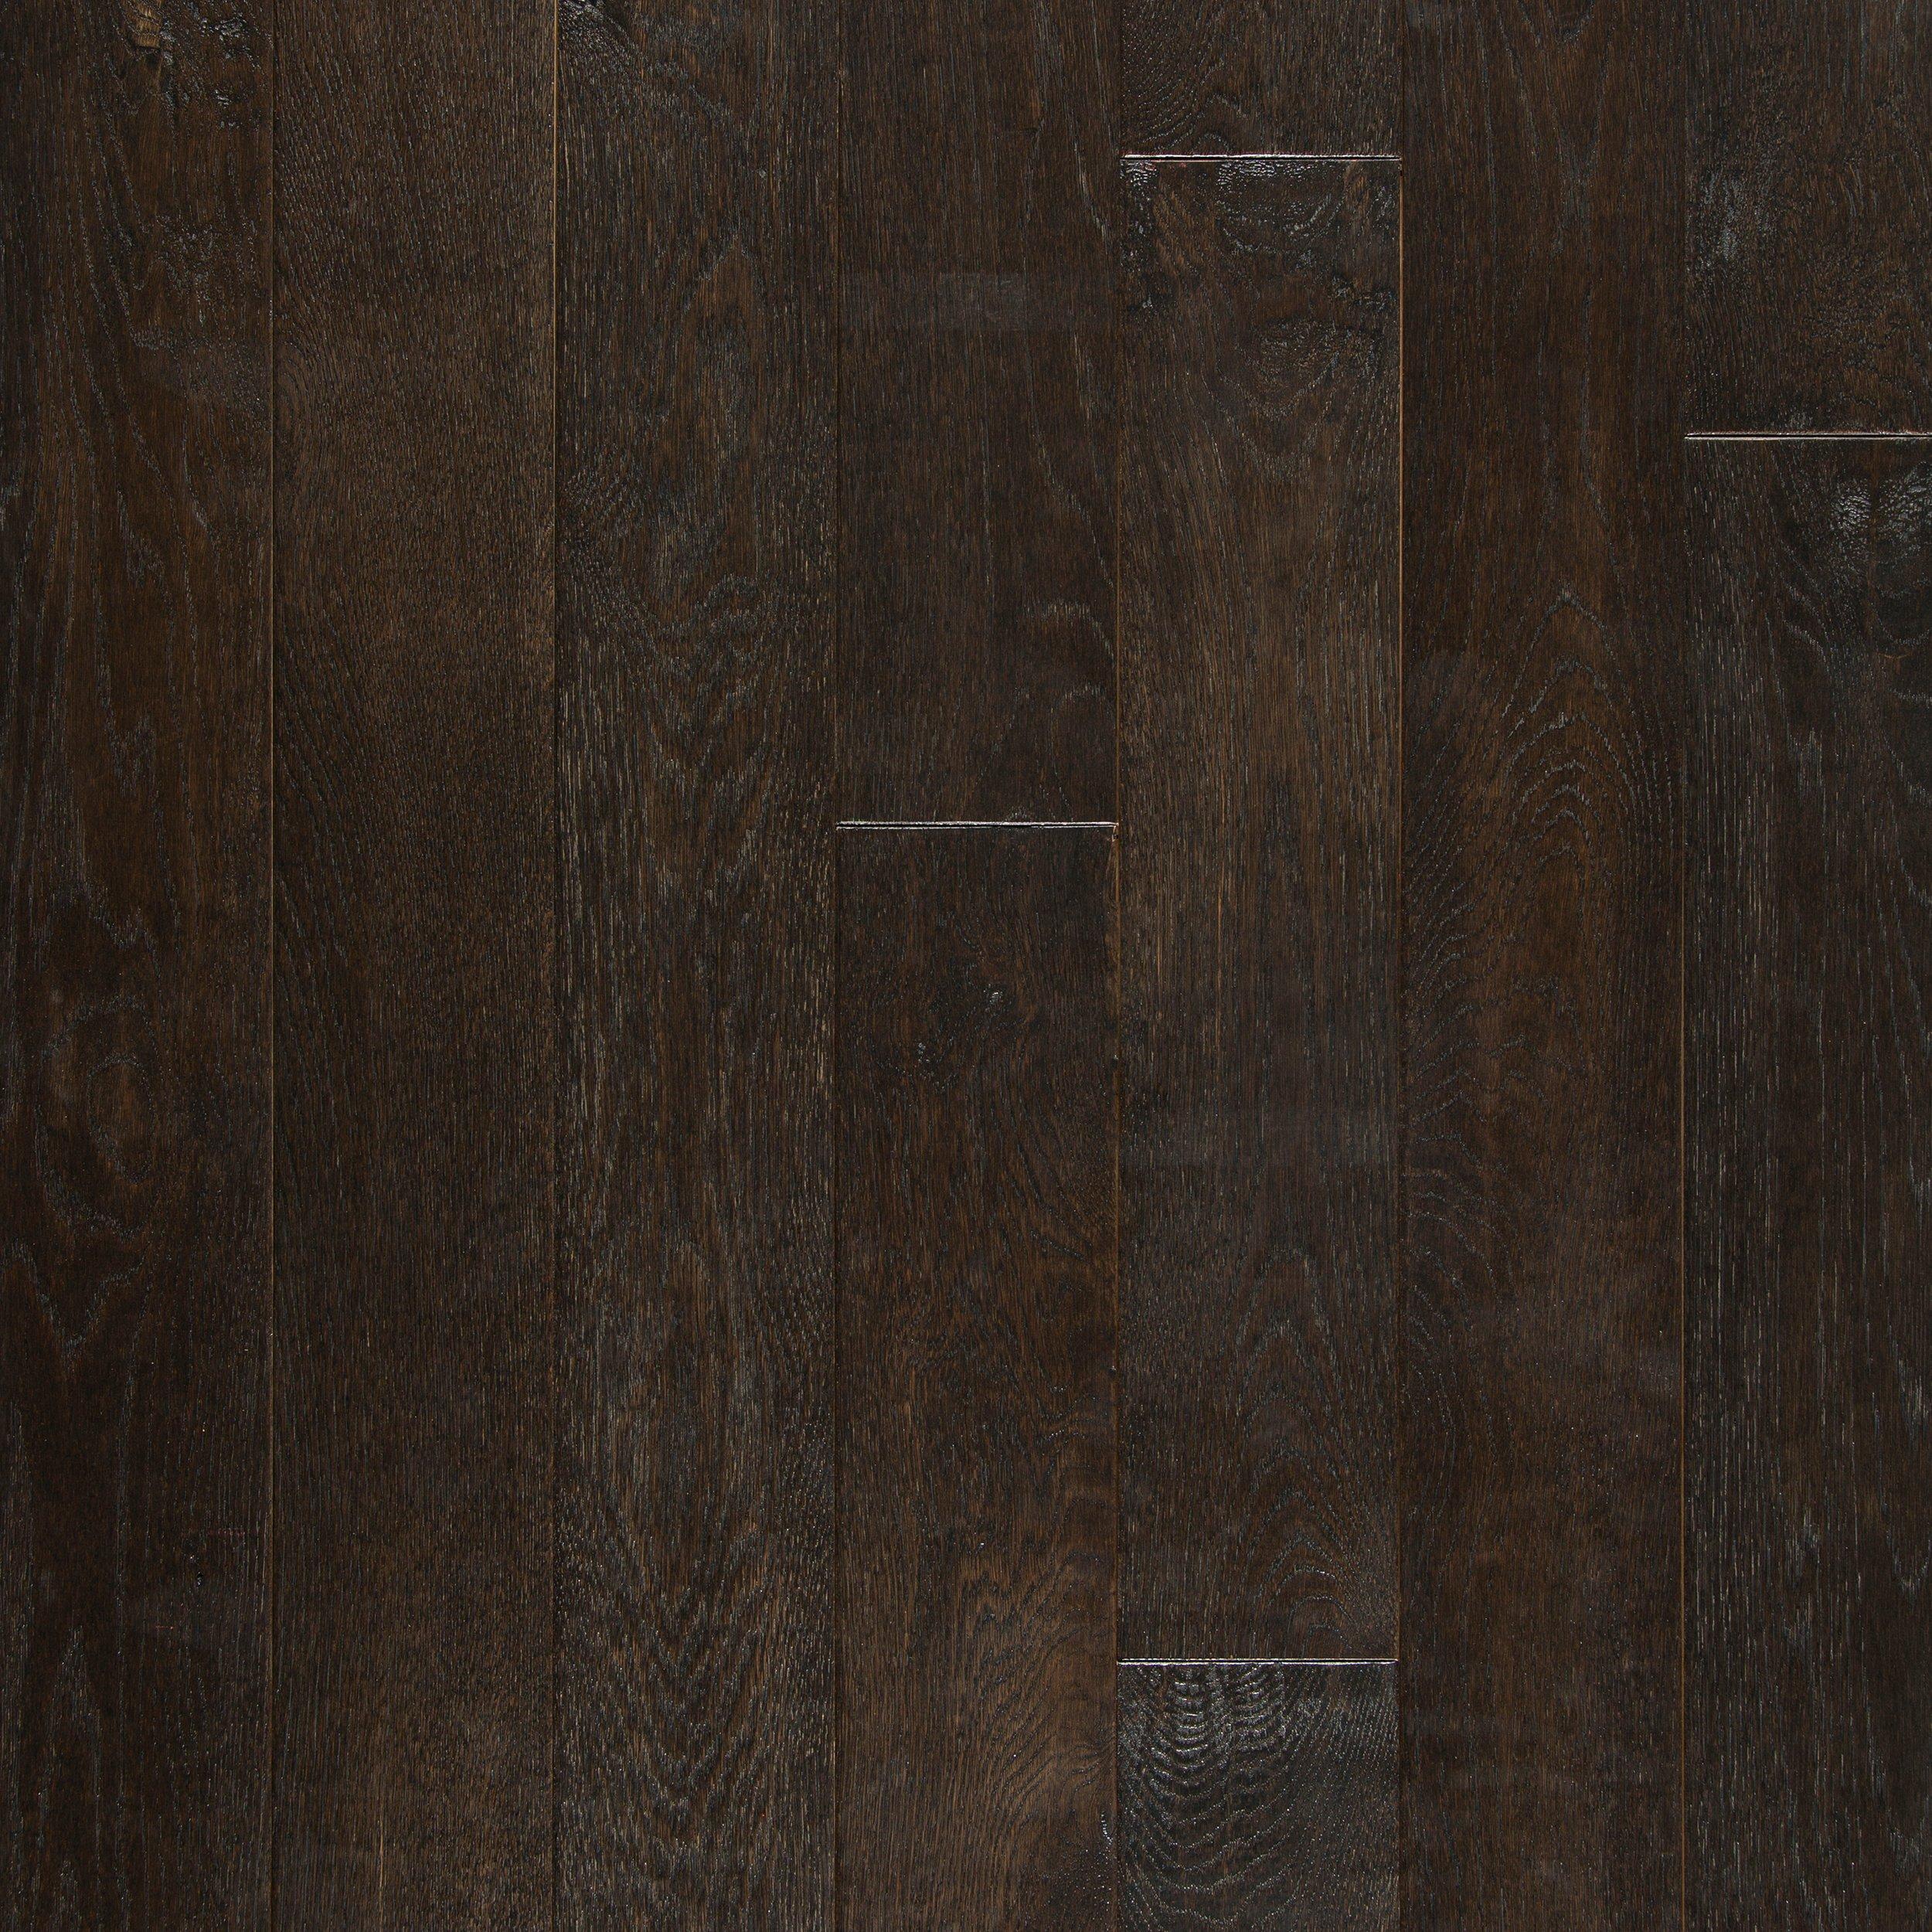 Torrace White Oak Distressed Solid, Distressed Solid Hardwood Flooring